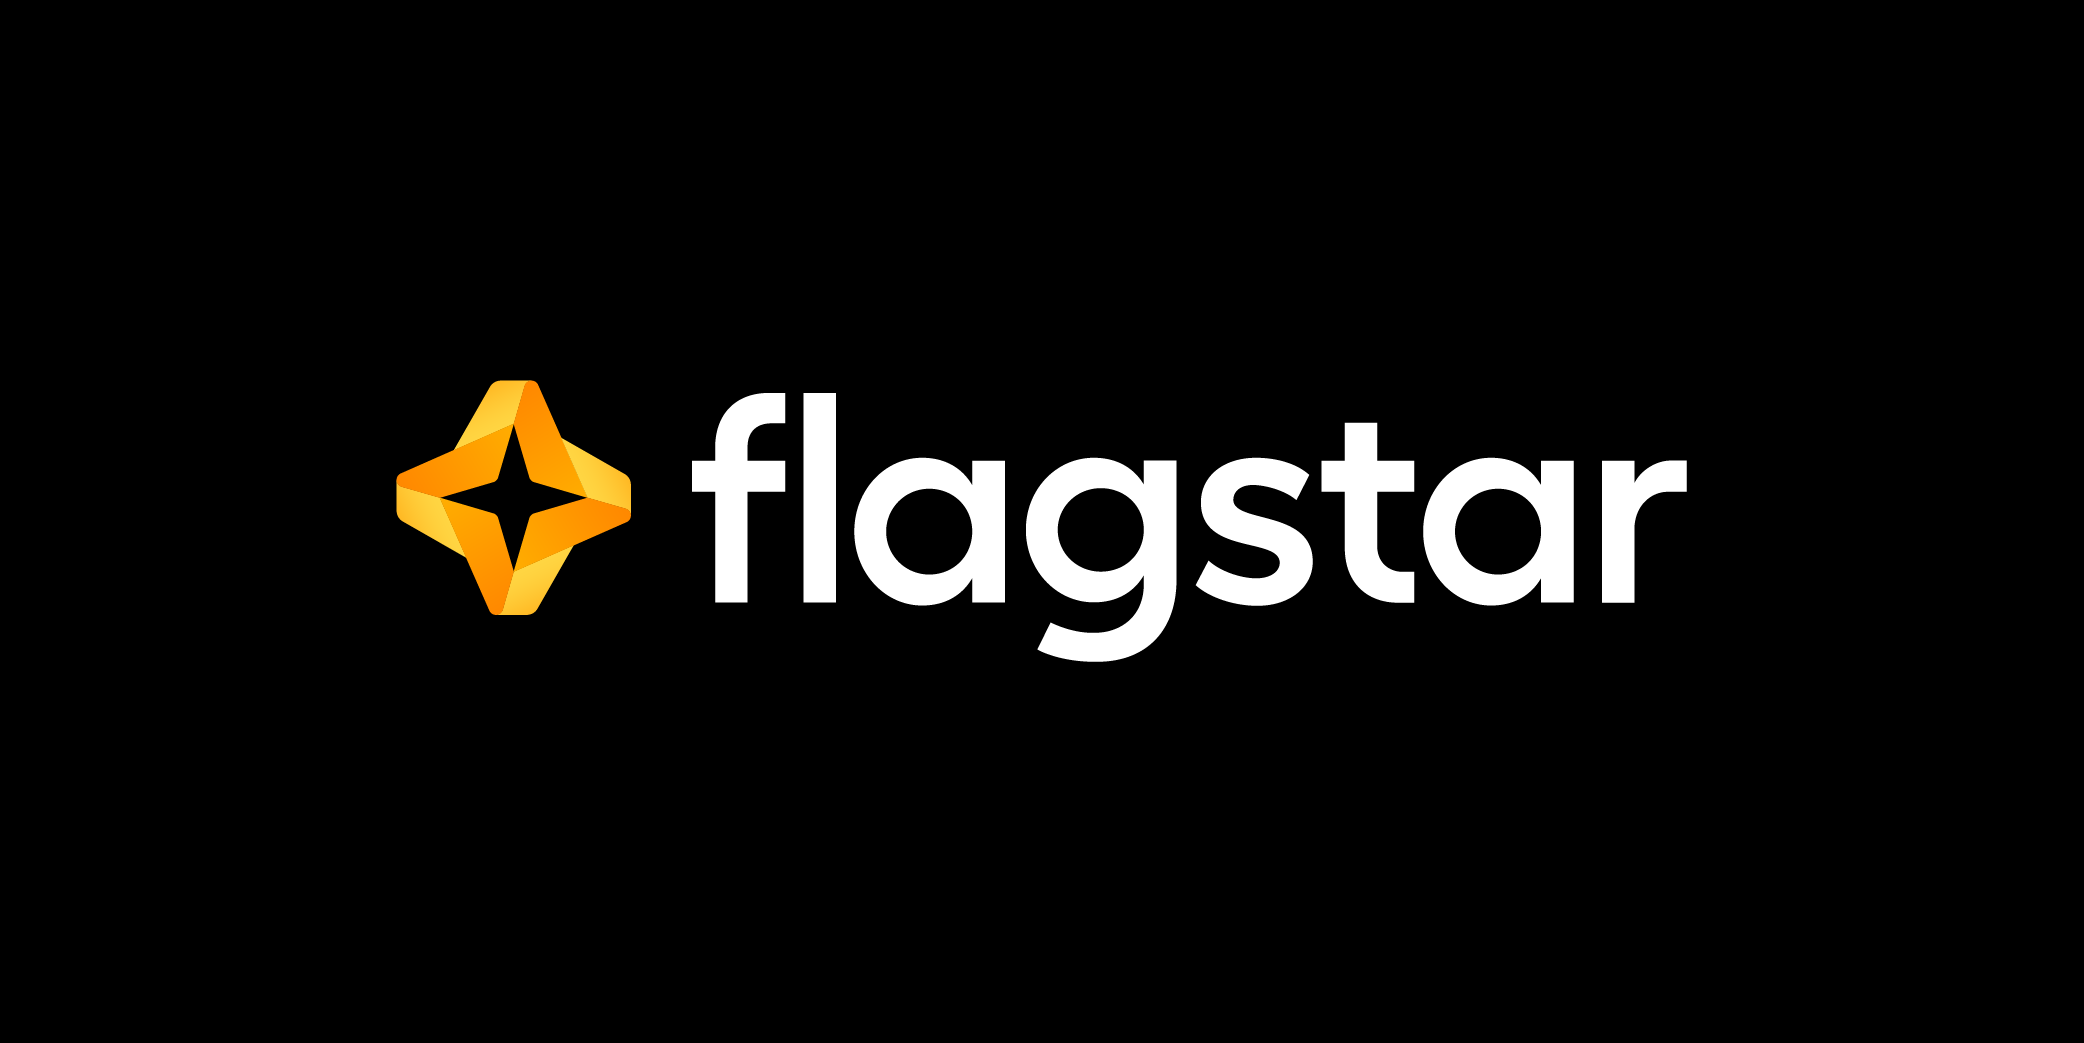 Flagstar logo on black background